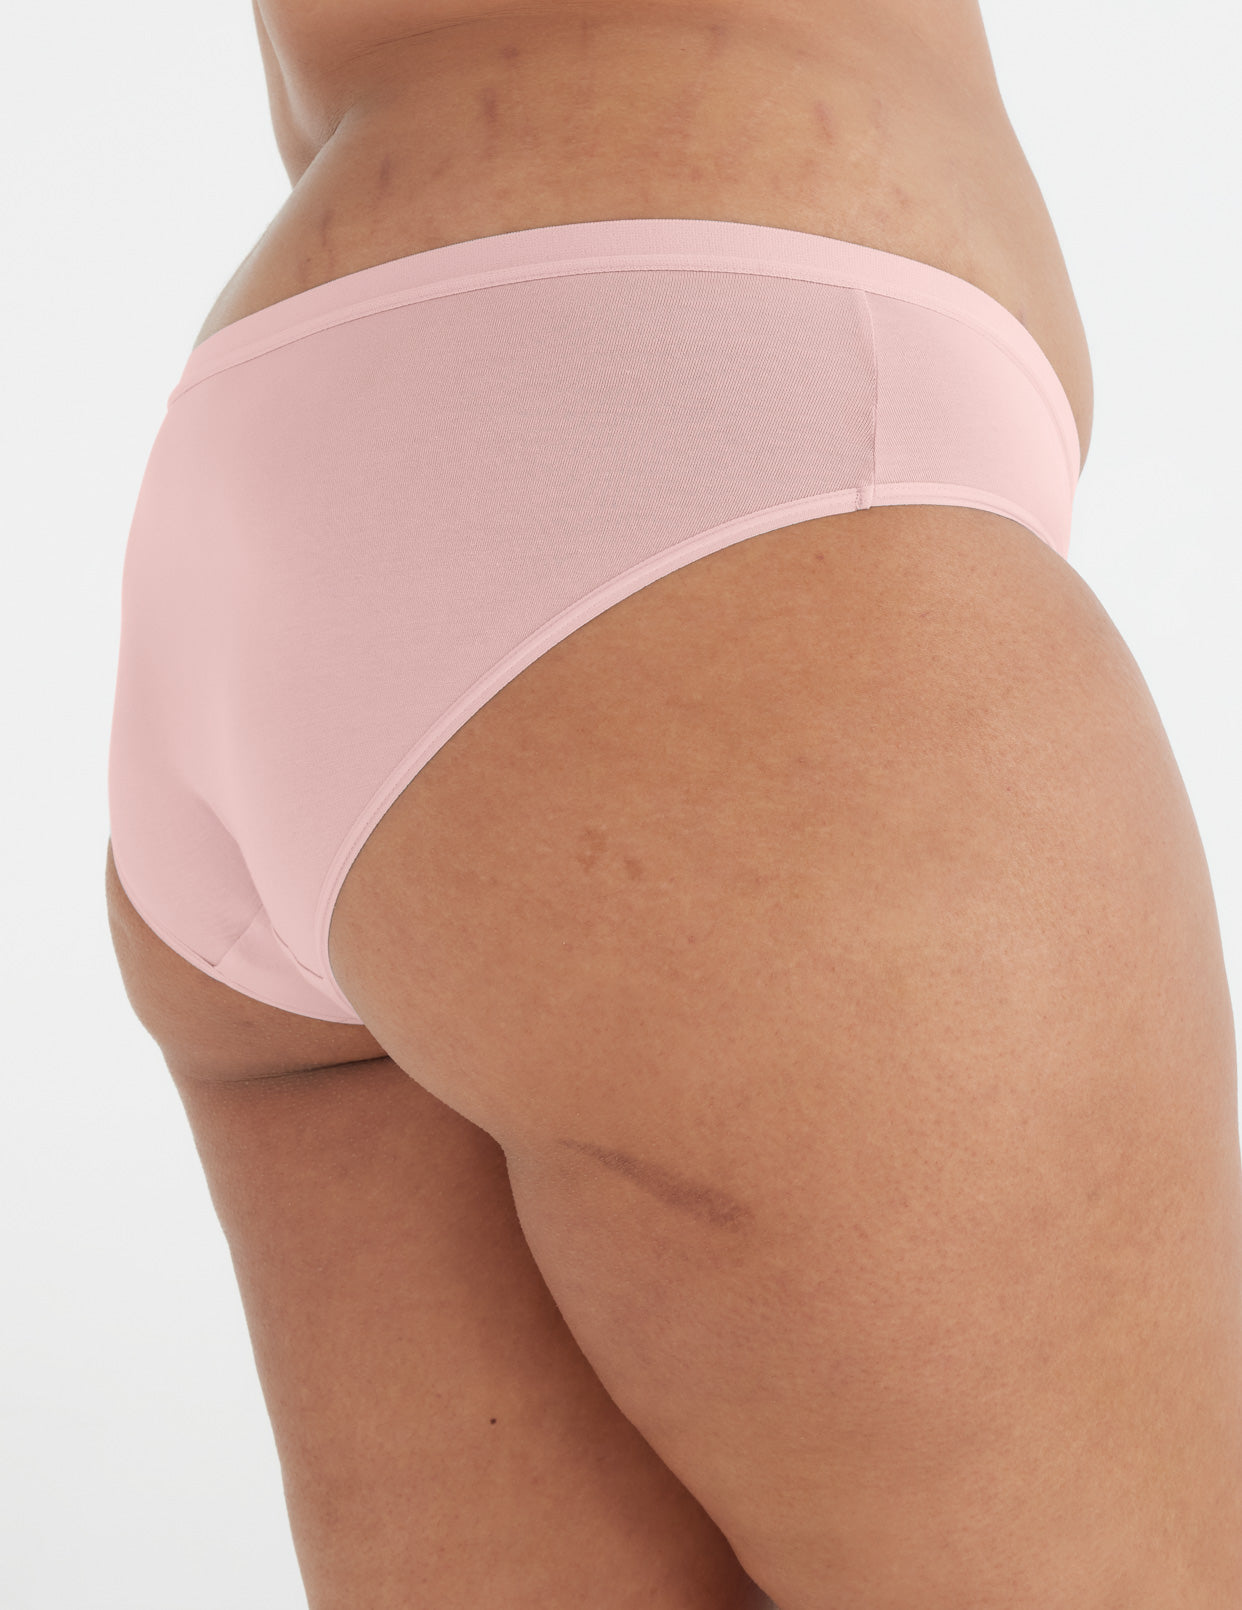 KPBMKE Period Underwear Postpartum Briefs Menstrual Leakproof Period Panties  Super Absorbency For Women 3-PACK, Black, S : : Clothing &  Accessories